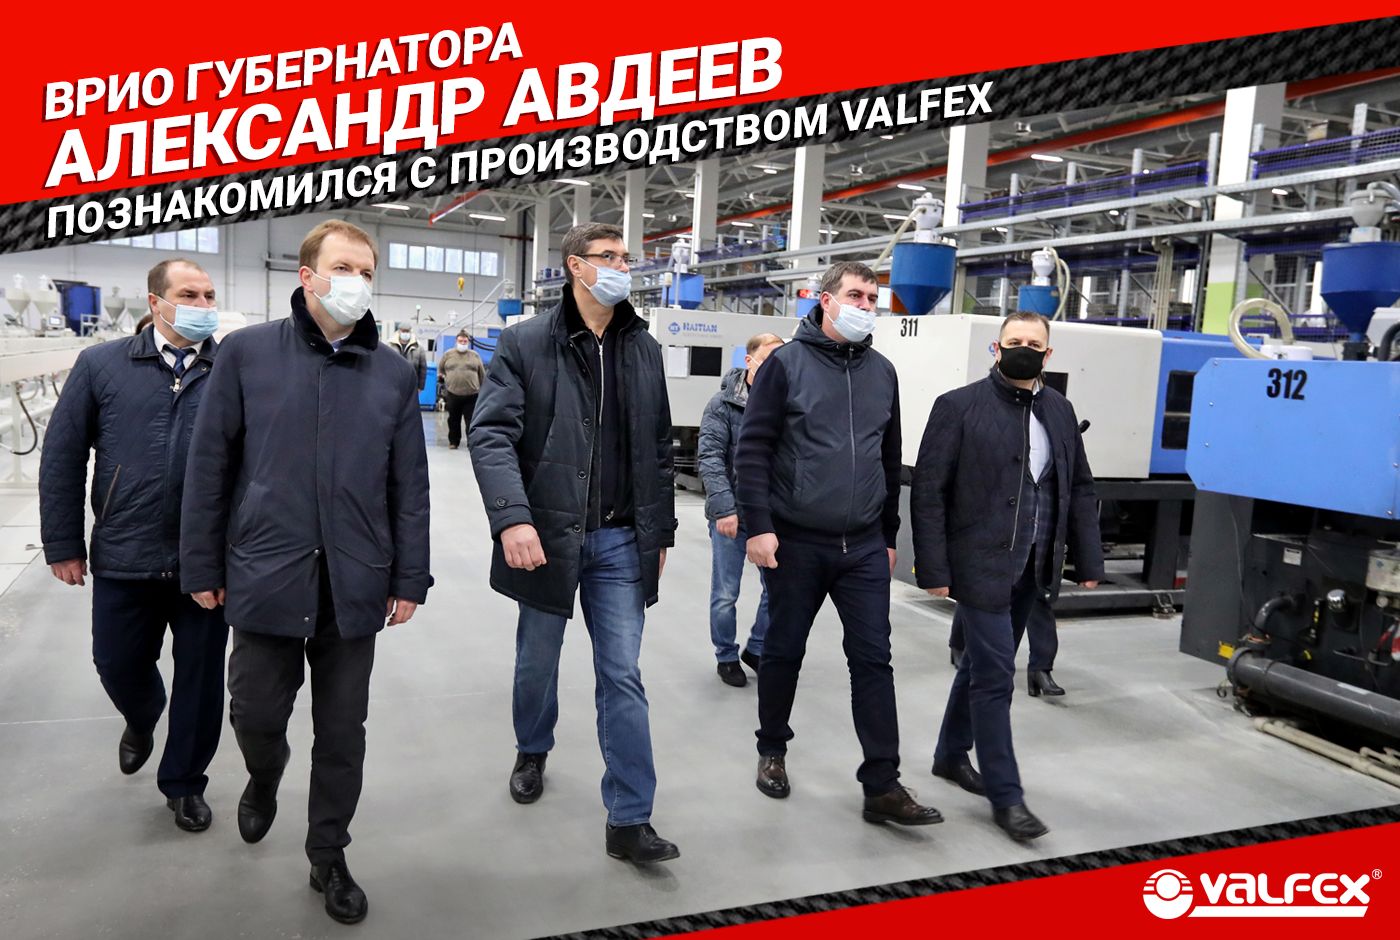 Врио Губернатора Александр Авдеев познакомился с производством VALFEX